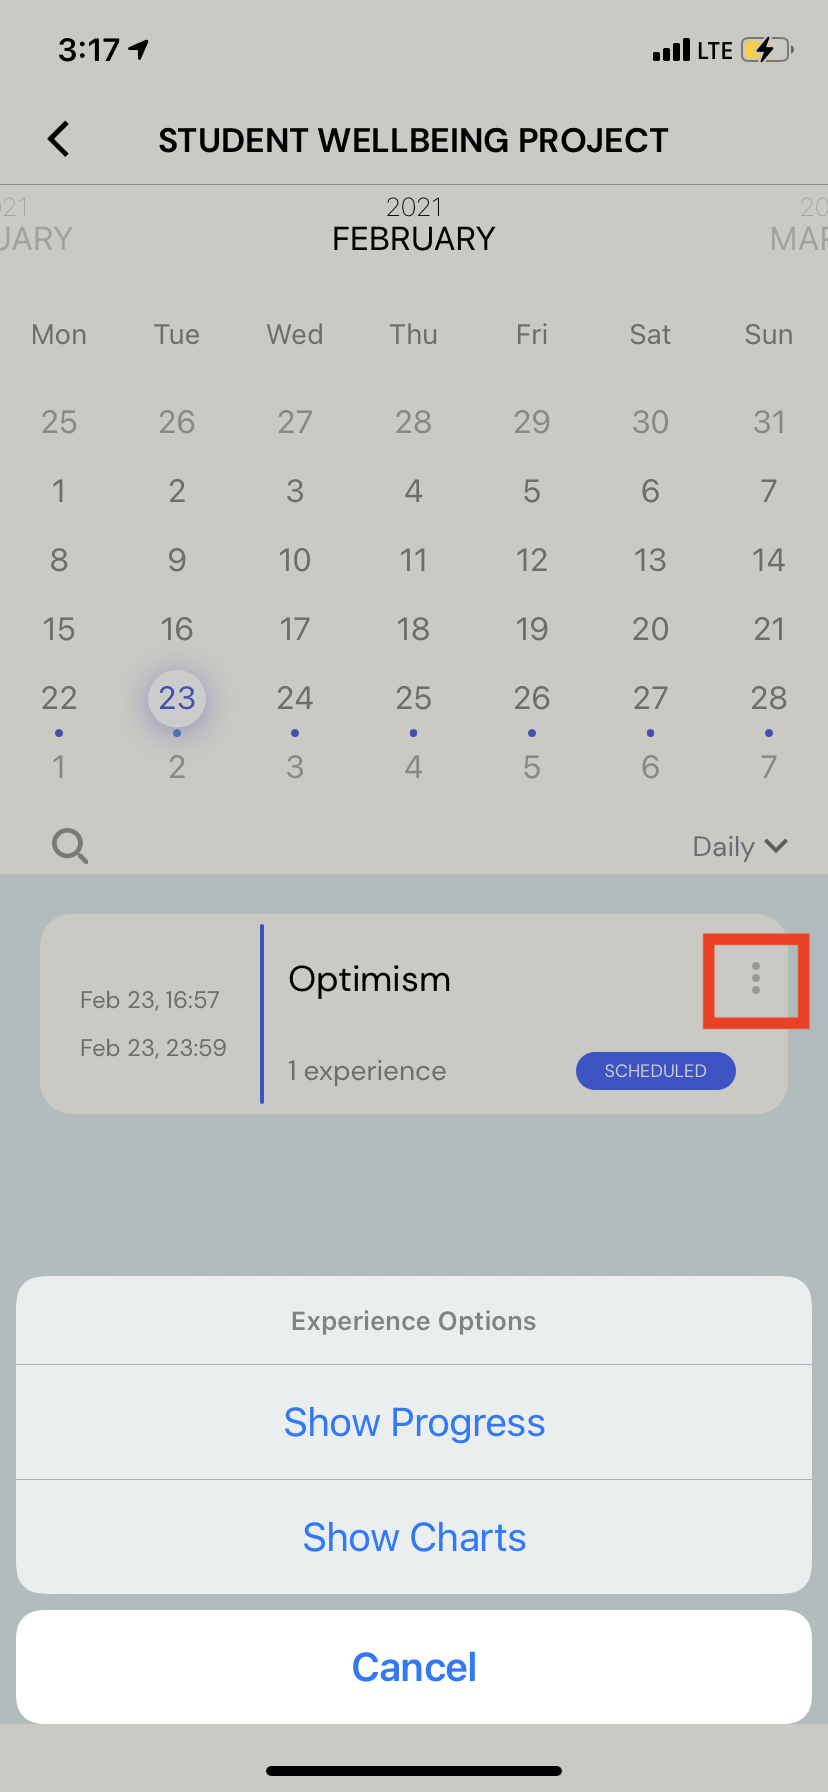 ExpiWell App interface showing a calendar